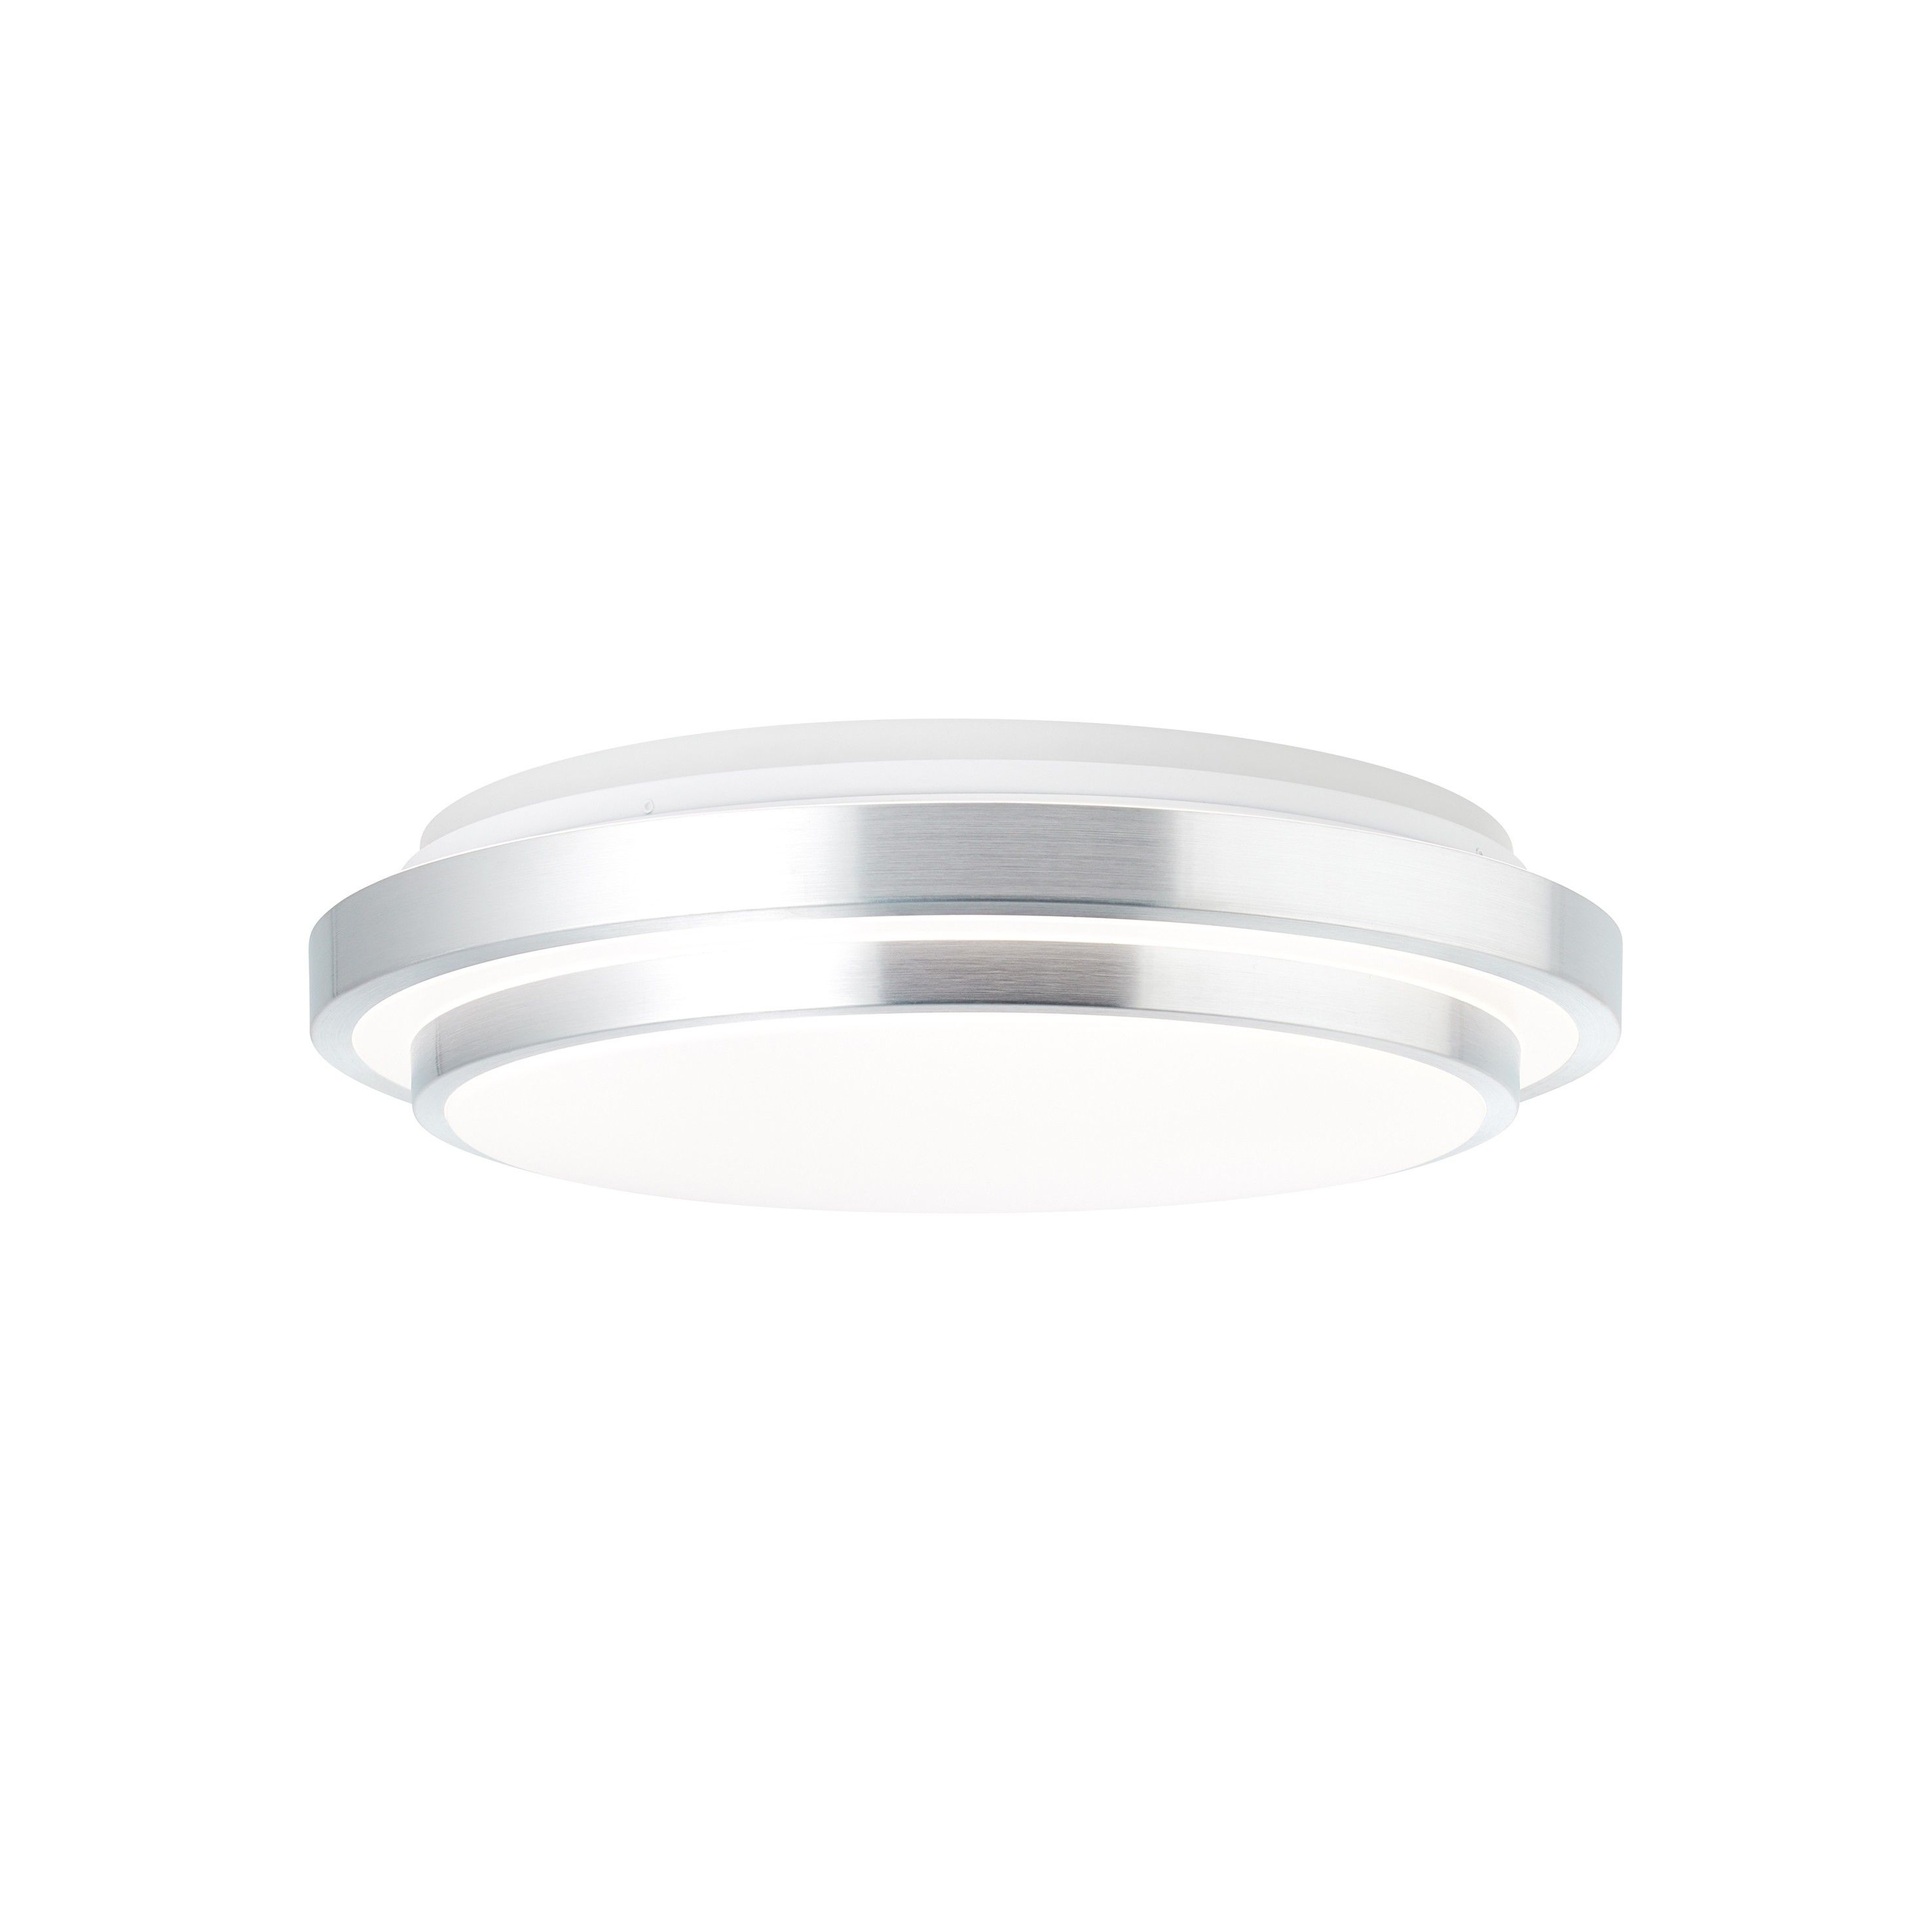 Luchten Kust Arthur Conan Doyle Brilliant Vilma - plafondverlichting RGB met afstandsbediening - Ø 51,5 x  15,5 cm - 32W dimbare LED incl. - wit en zilver | Lichtkoning